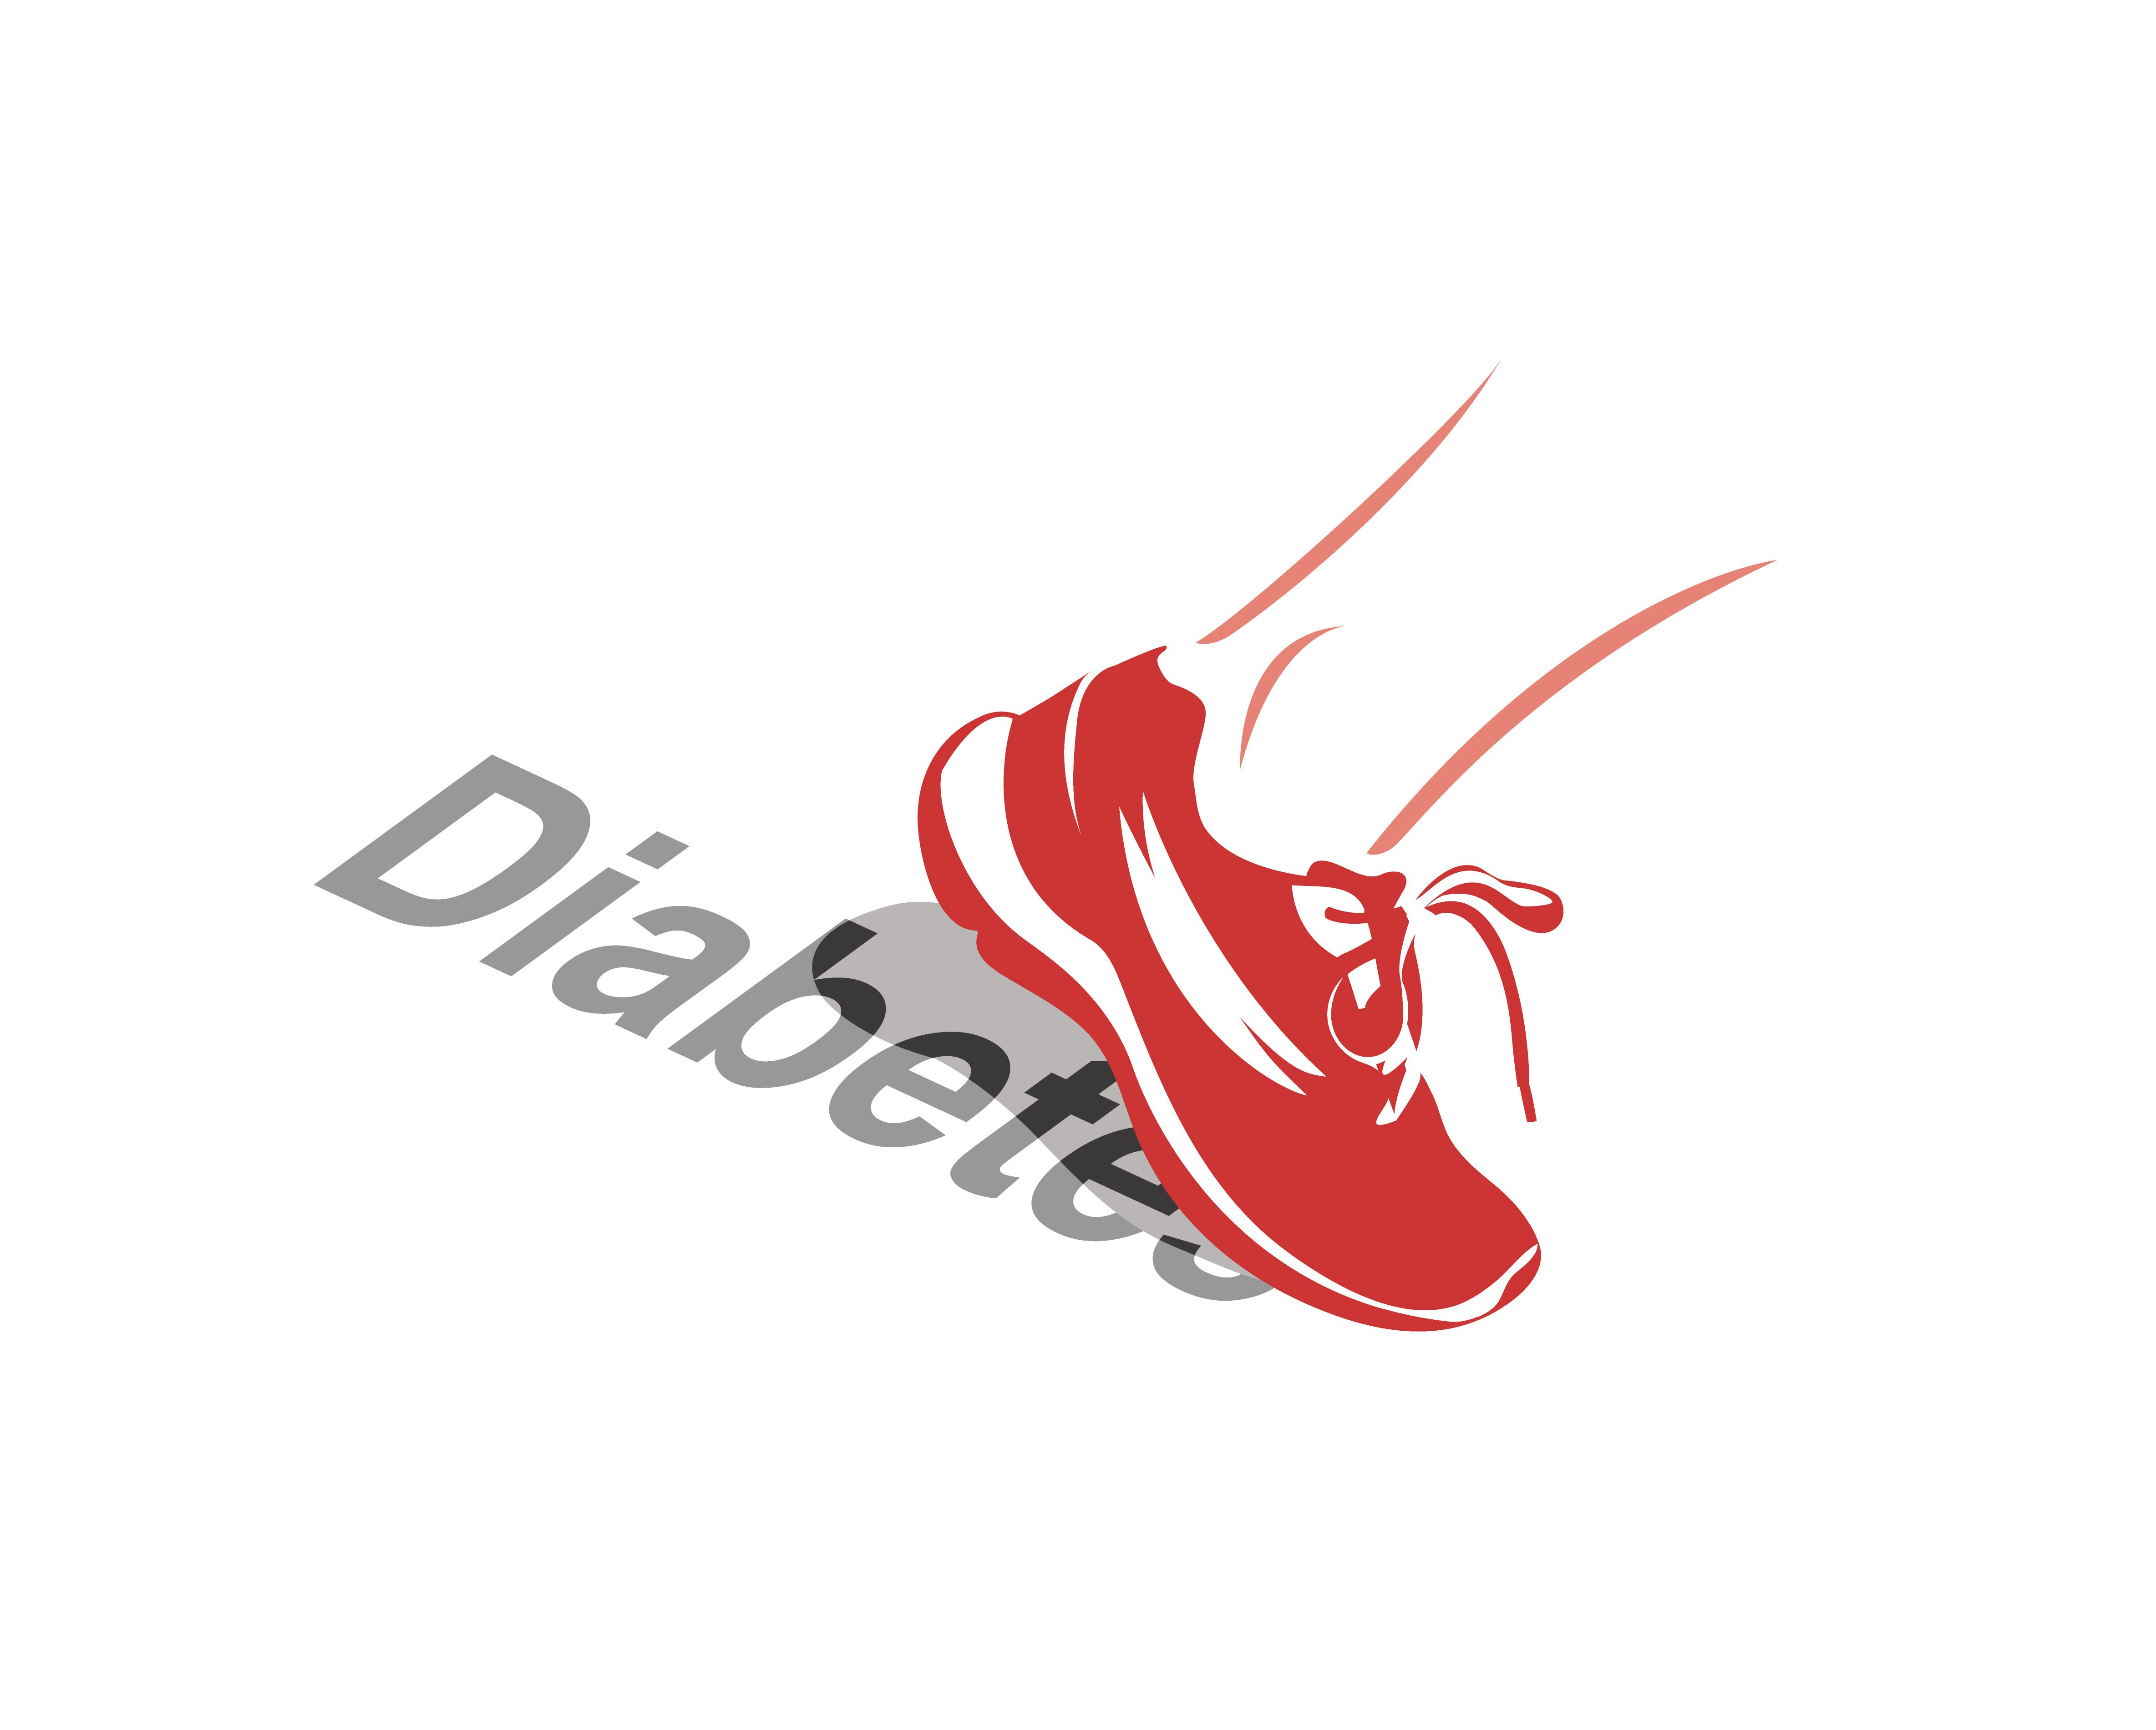 Running from diabetes